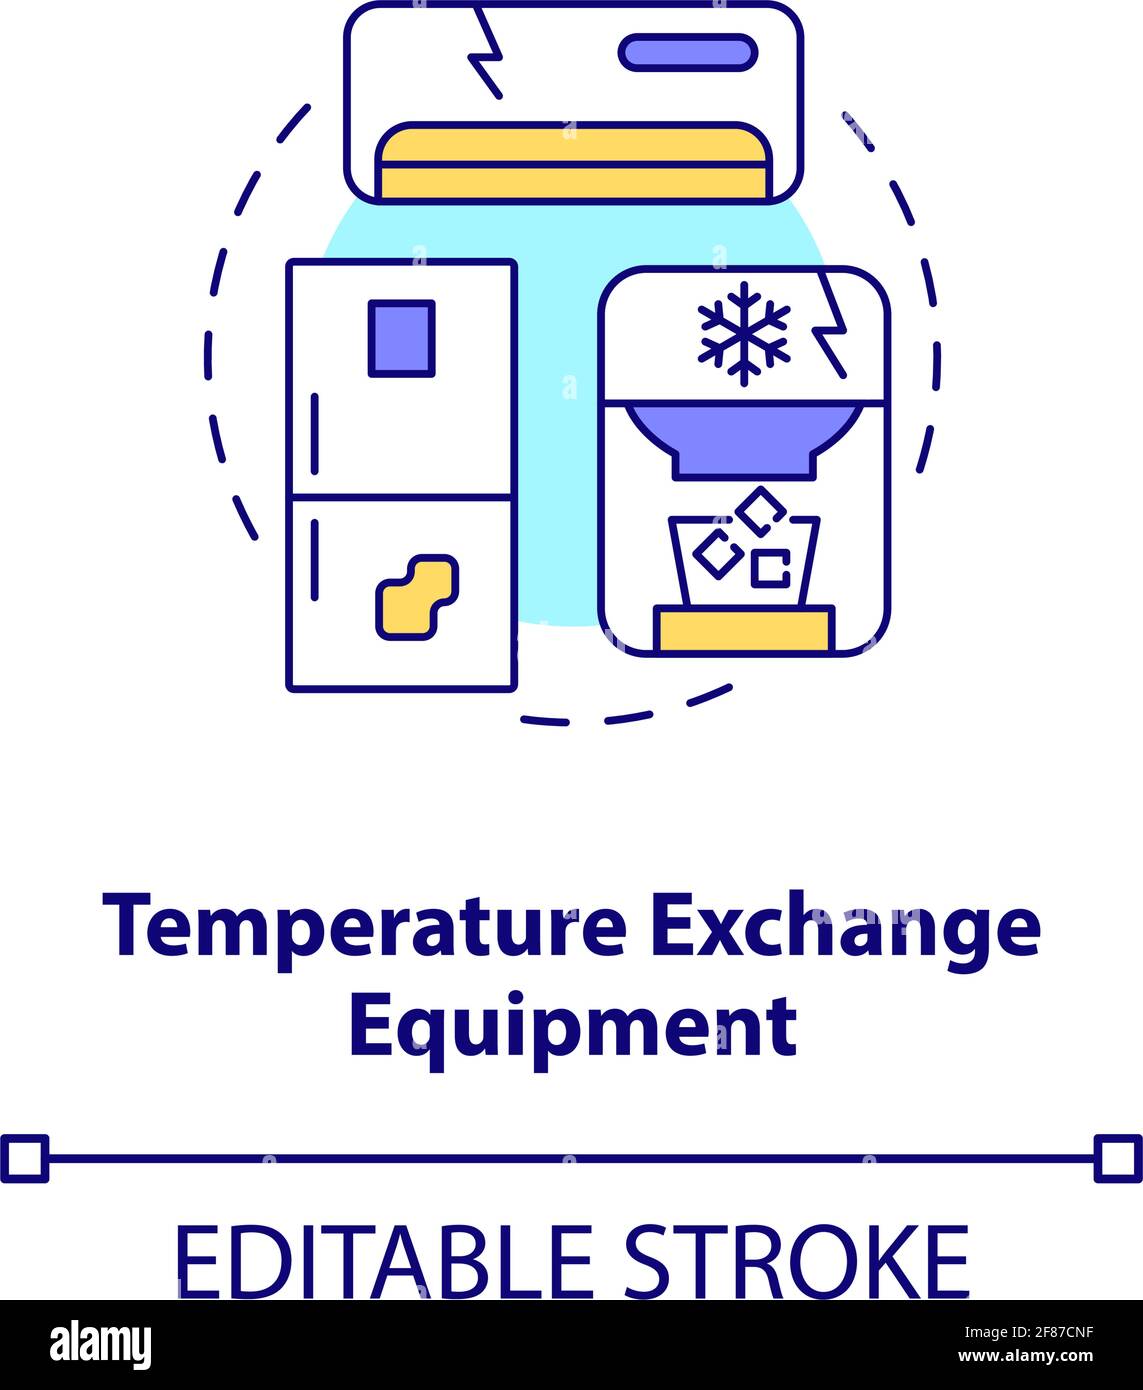 Temperature exchange equipment concept icon Stock Vector